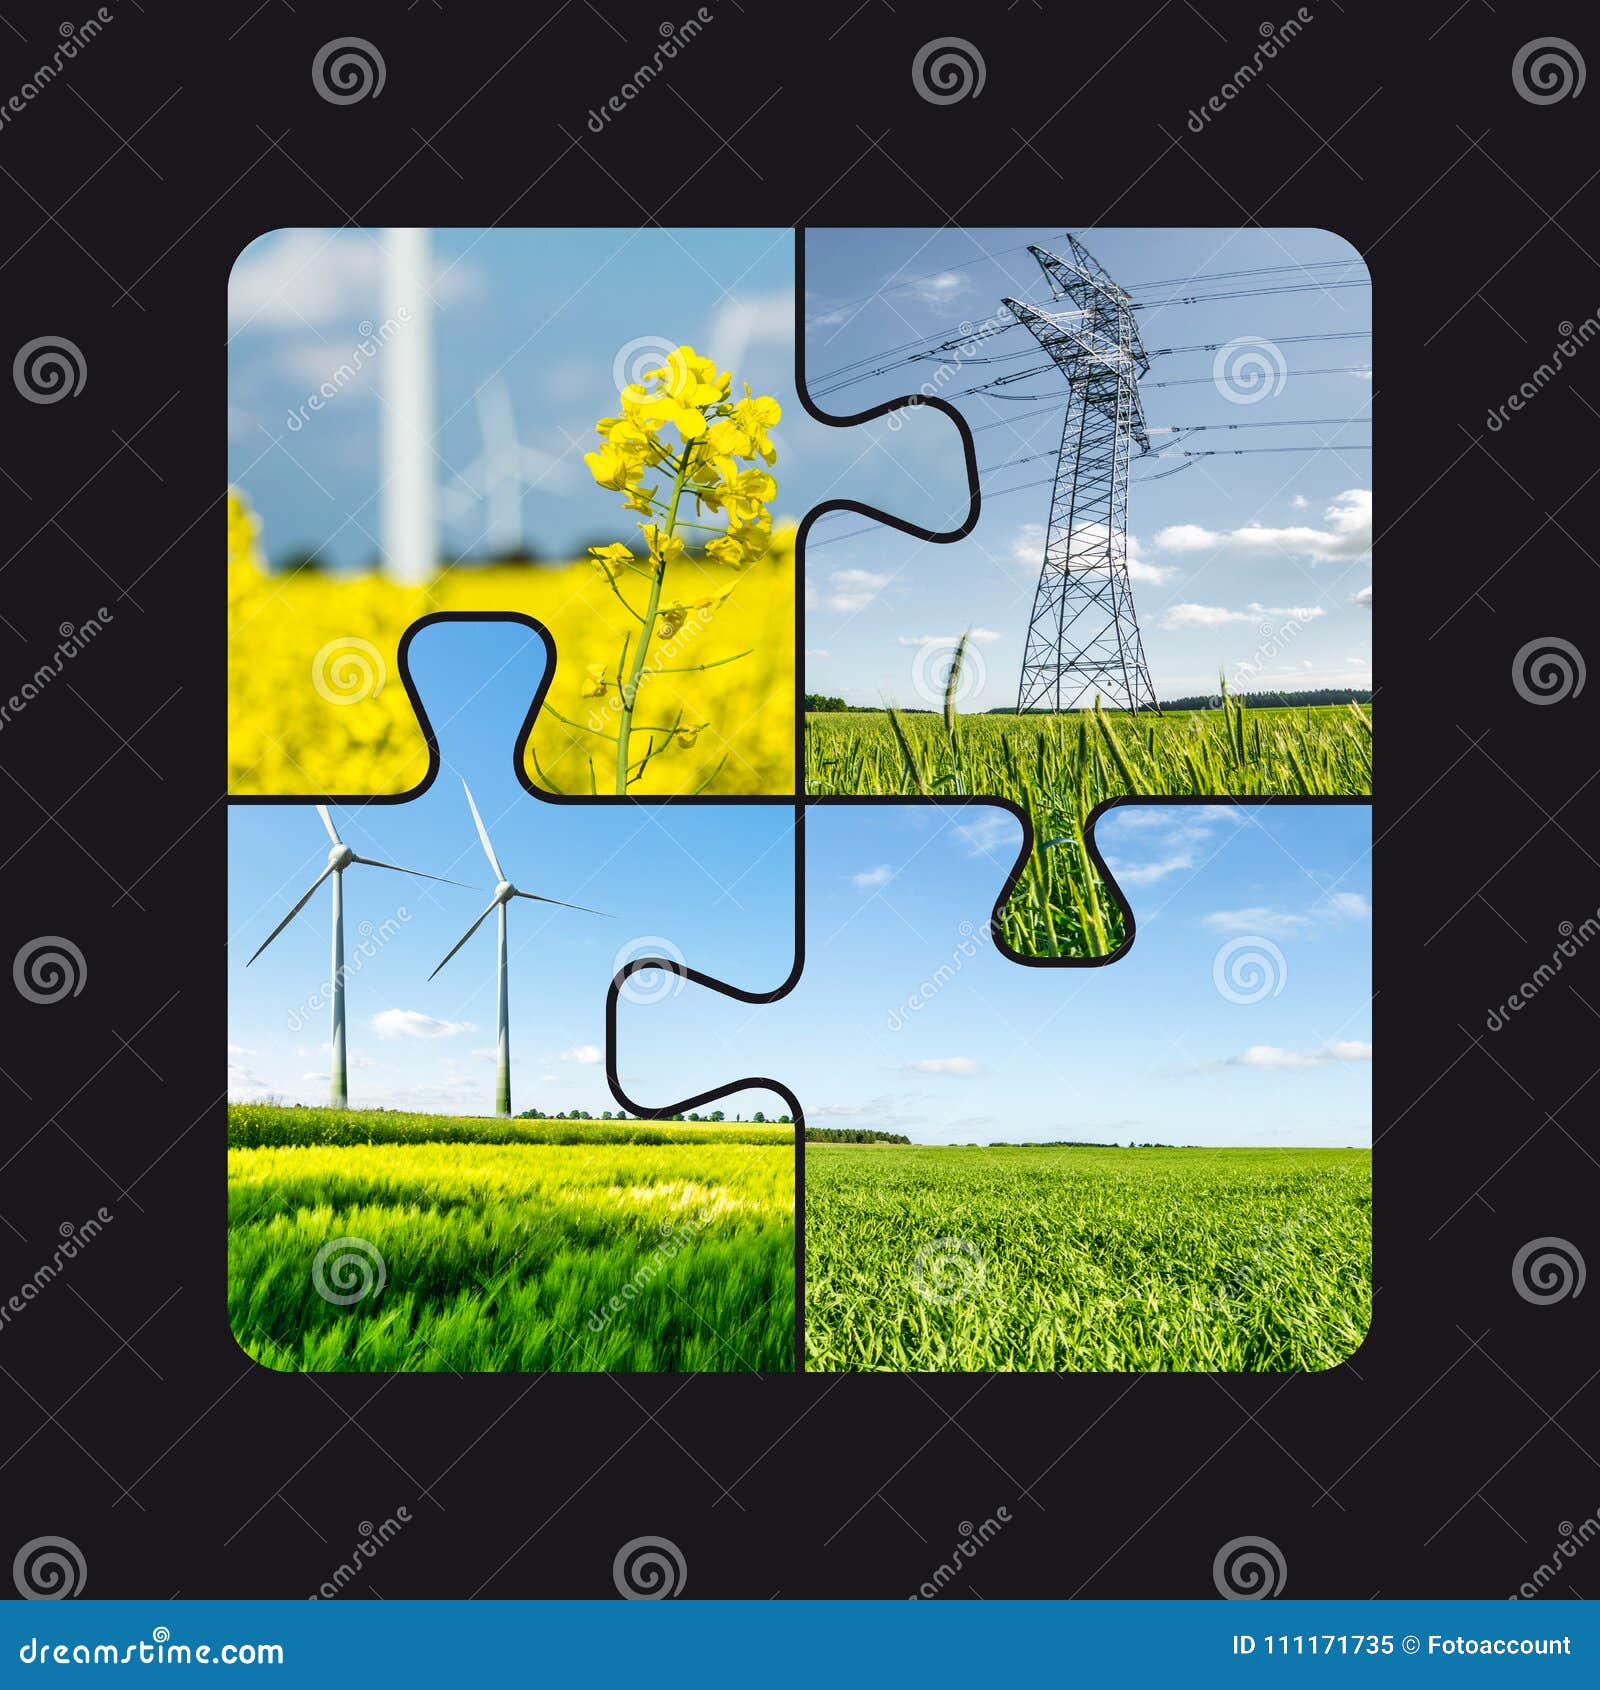 renewable energies concept puzzle collage